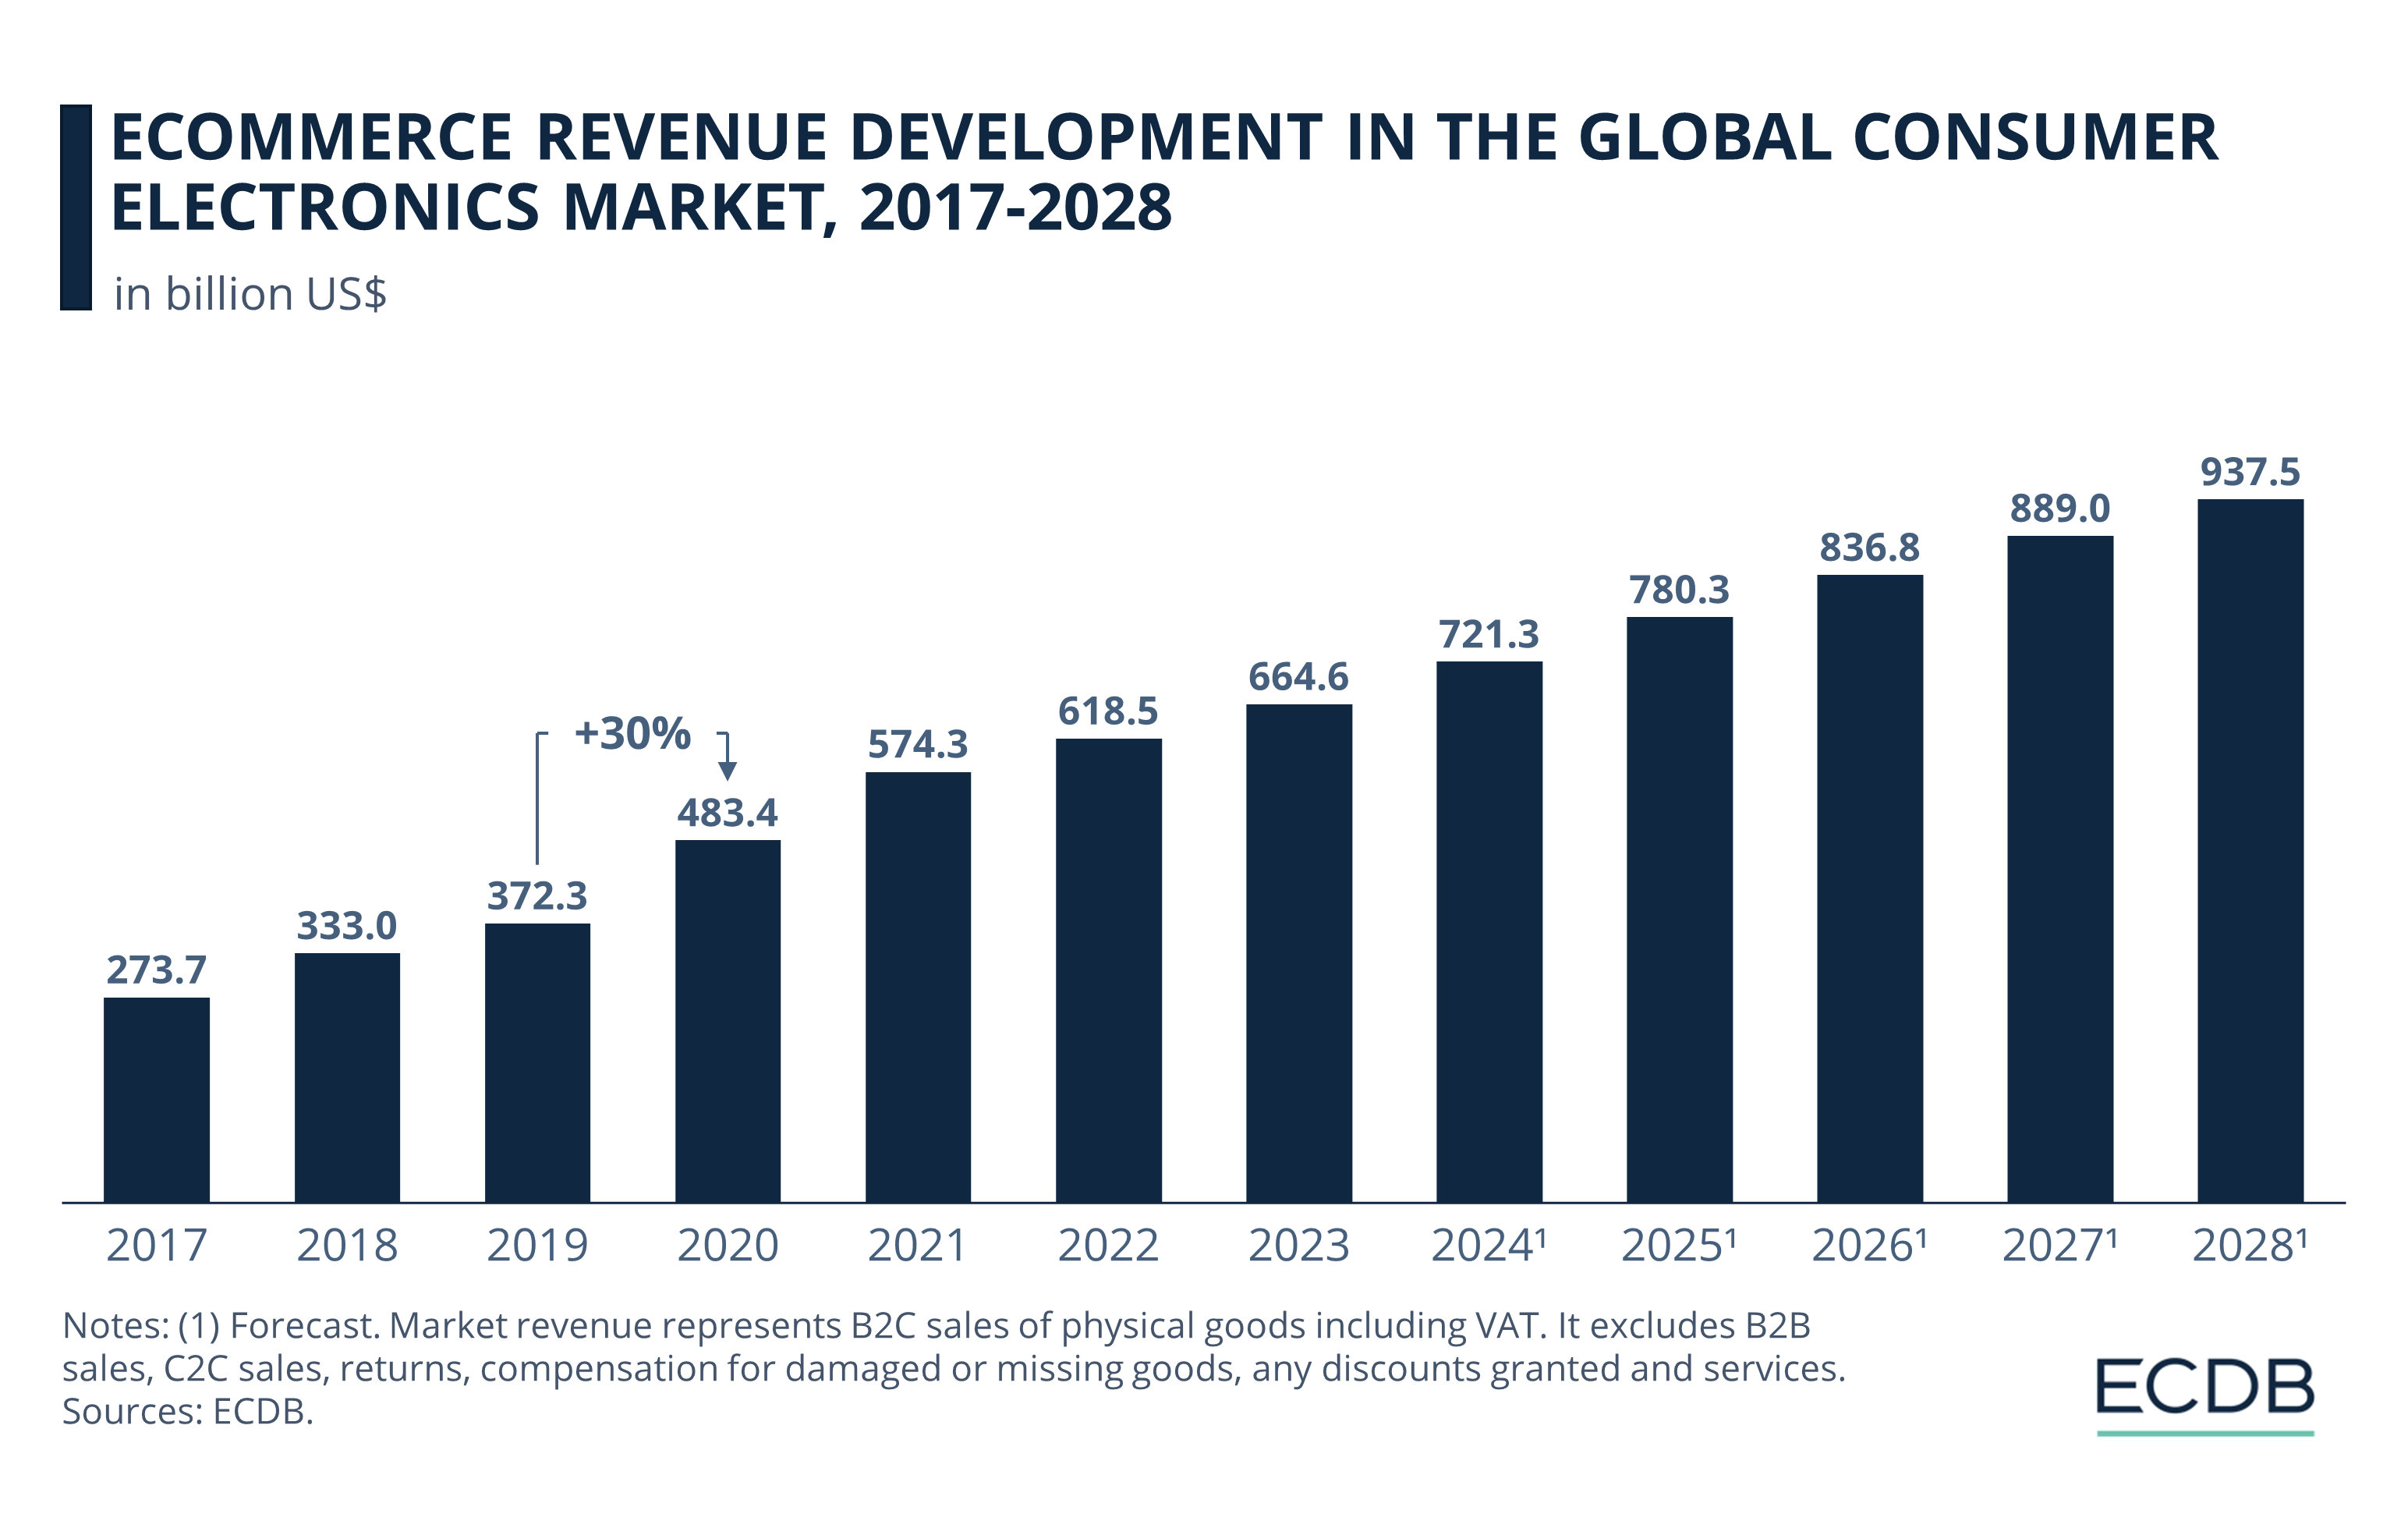 eCommerce Revenue Development in the Global Consumer Electronics Market, 2017-2028